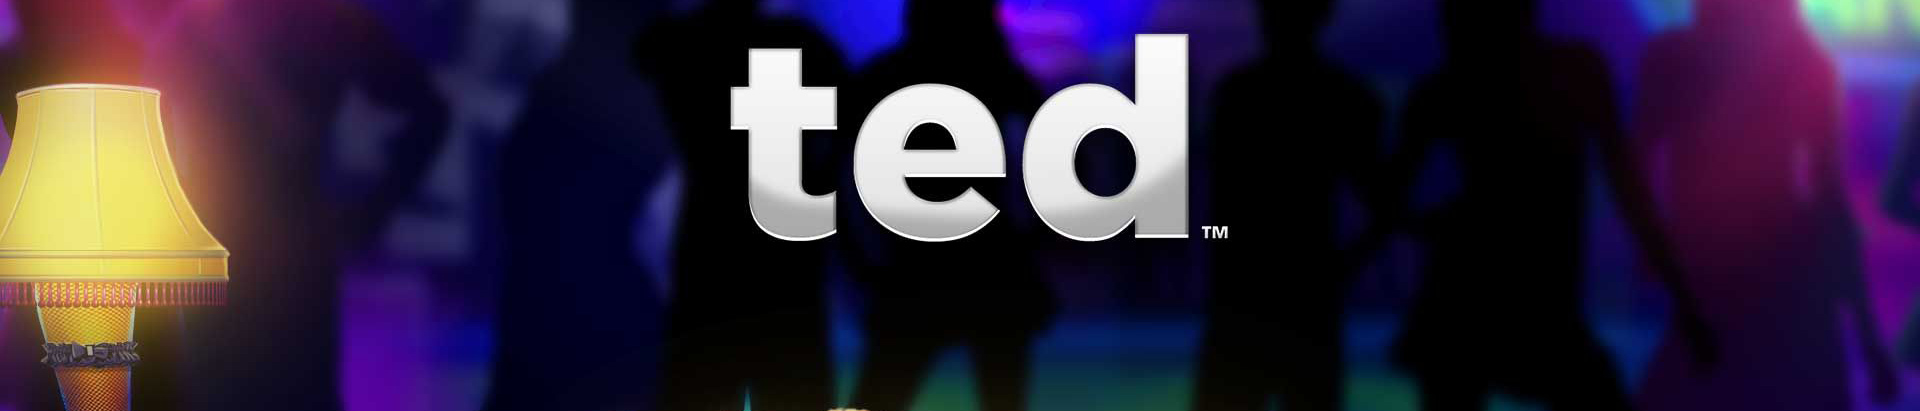 ted-slot-banner-resized